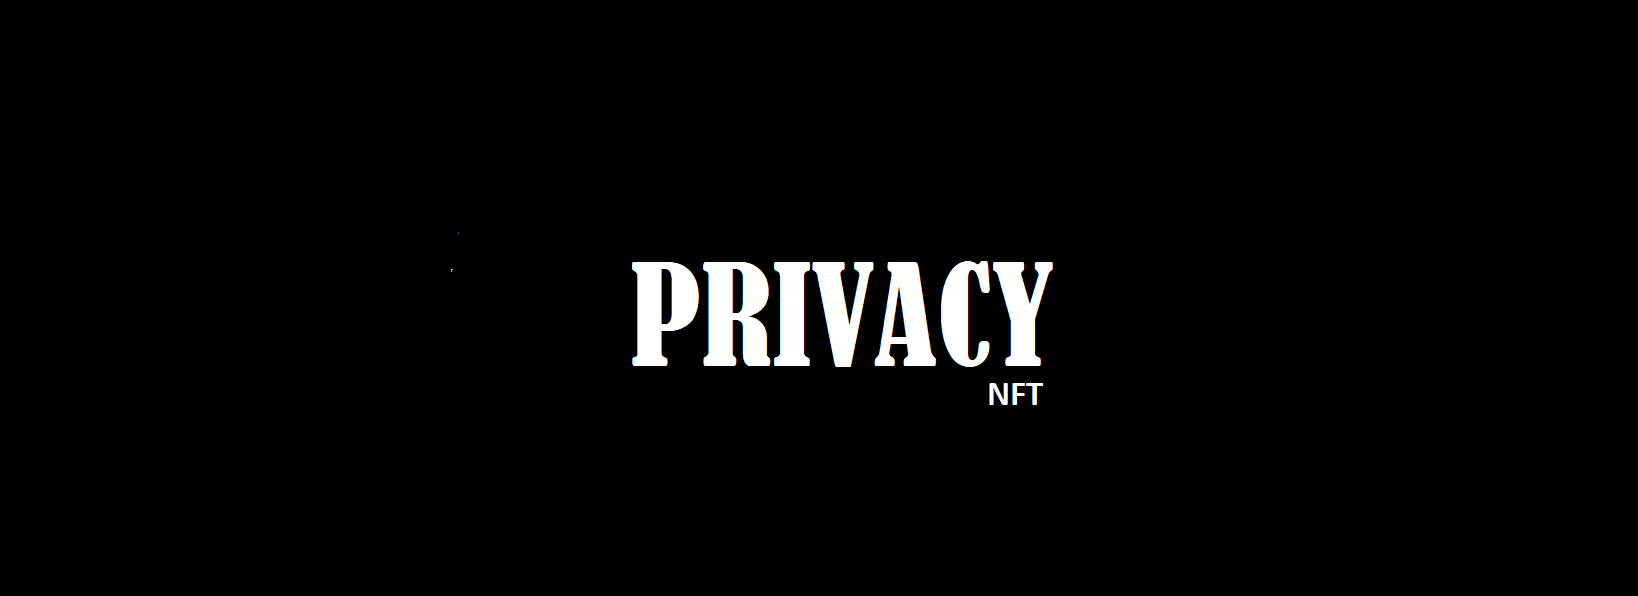 PrivacyNFT 横幅